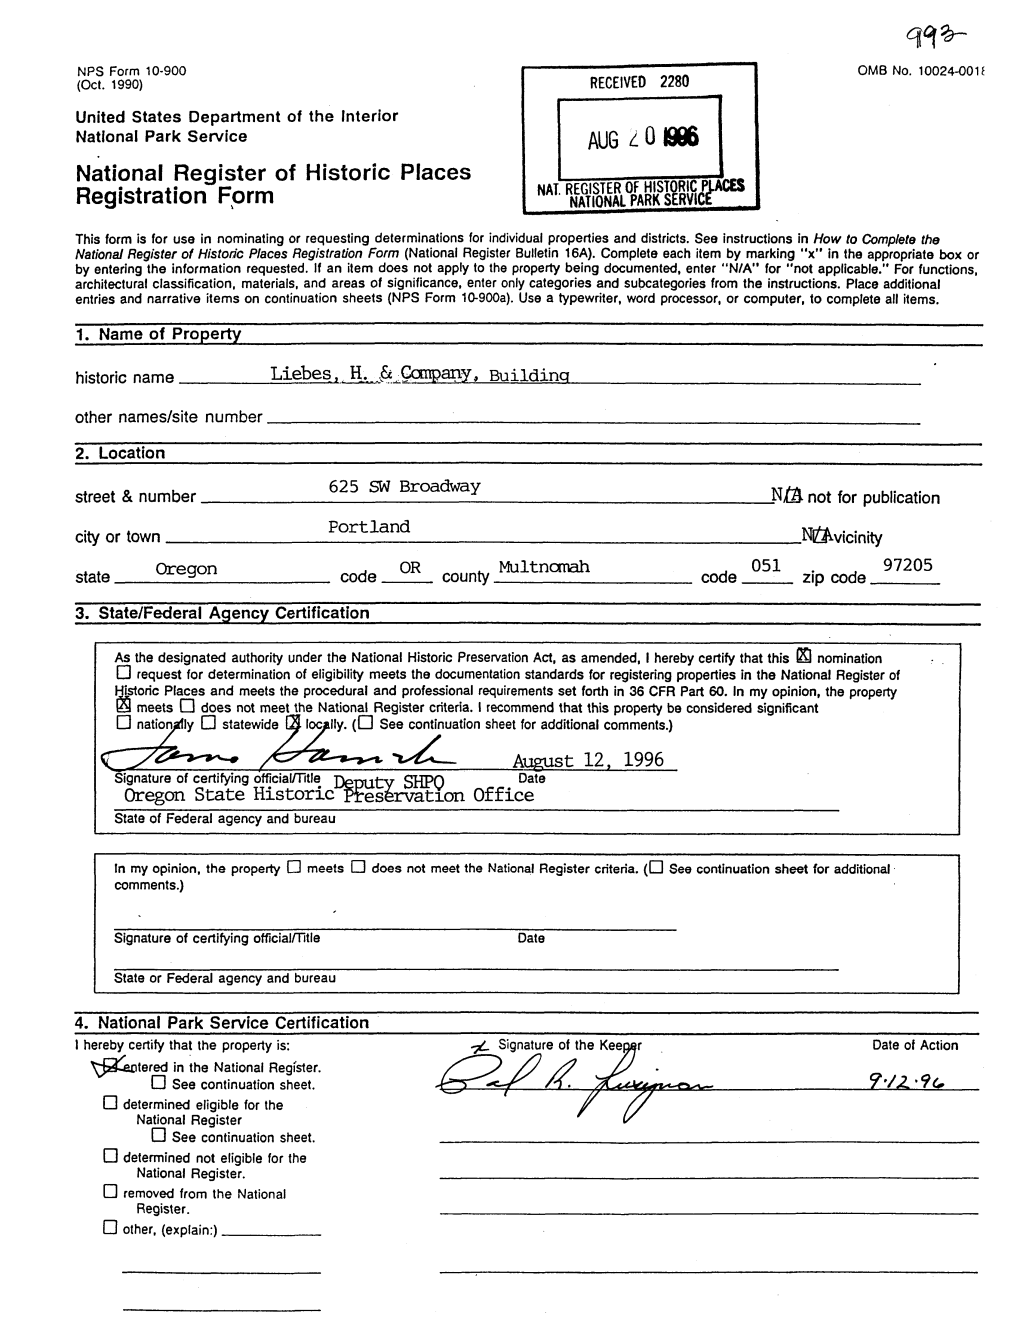 AUG 1 0 886 National Register of Historic Places NAT REGISTER of HISTORIC PLACES Registration Form NATIONAL PARK SERVICE